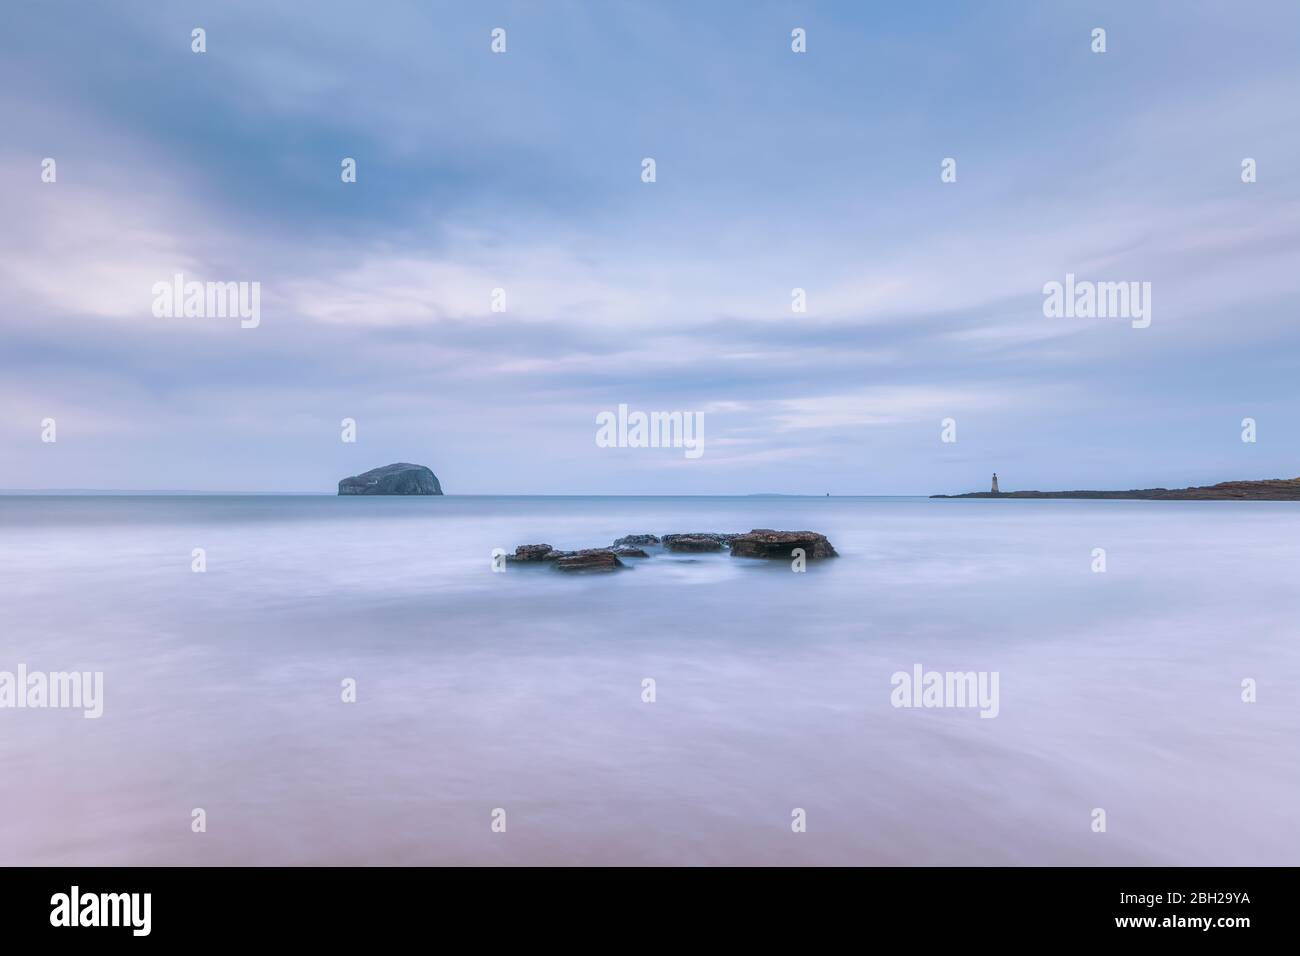 UK, Scotland, North Berwick, Seacliff coast with Bass Rock island in background Stock Photo